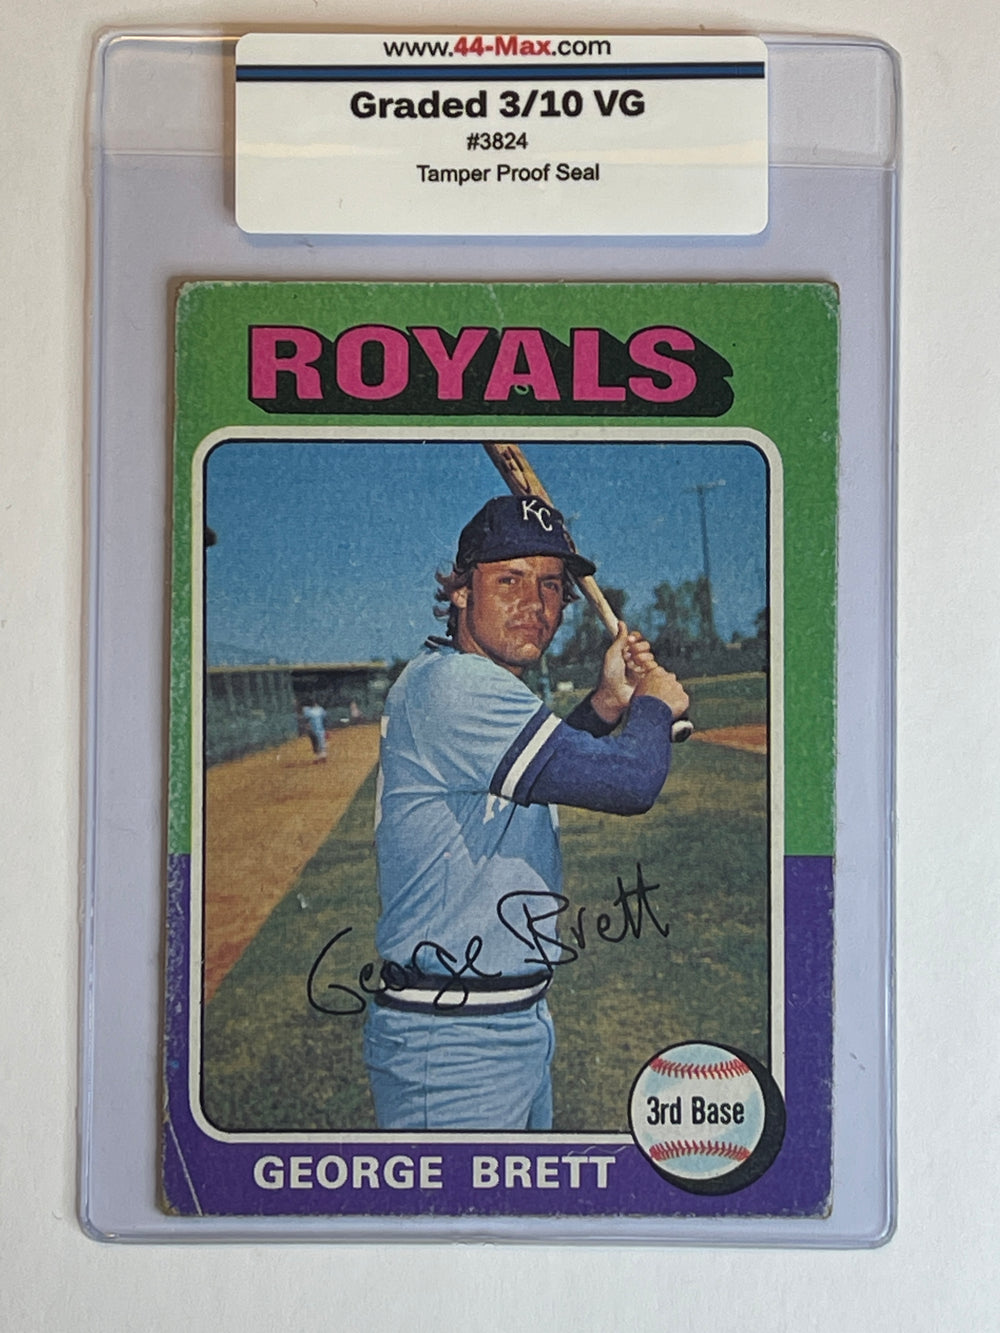 George Brett 1975 Topps Rookie Baseball Card. 44-Max 3/10 VG #3824